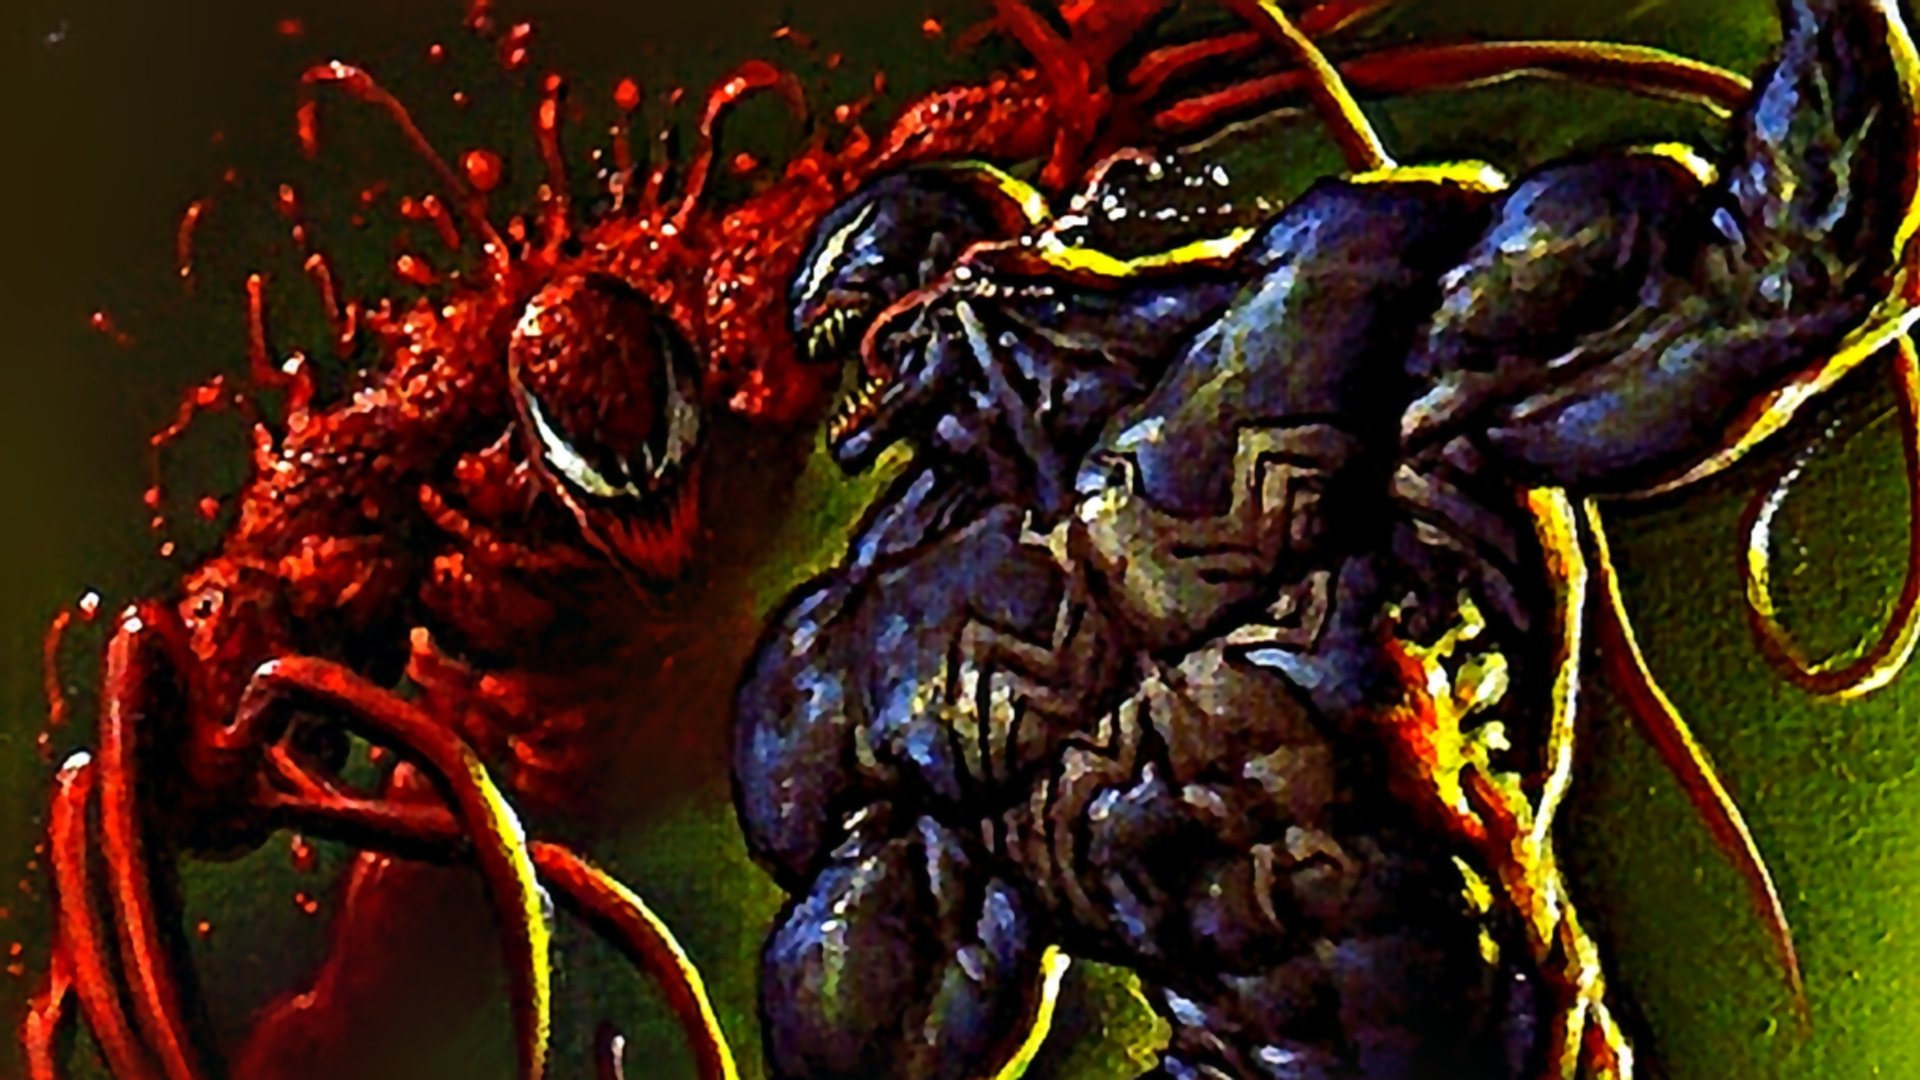 carnage marvel wallpaper,fictional character,organism,demon,superhero